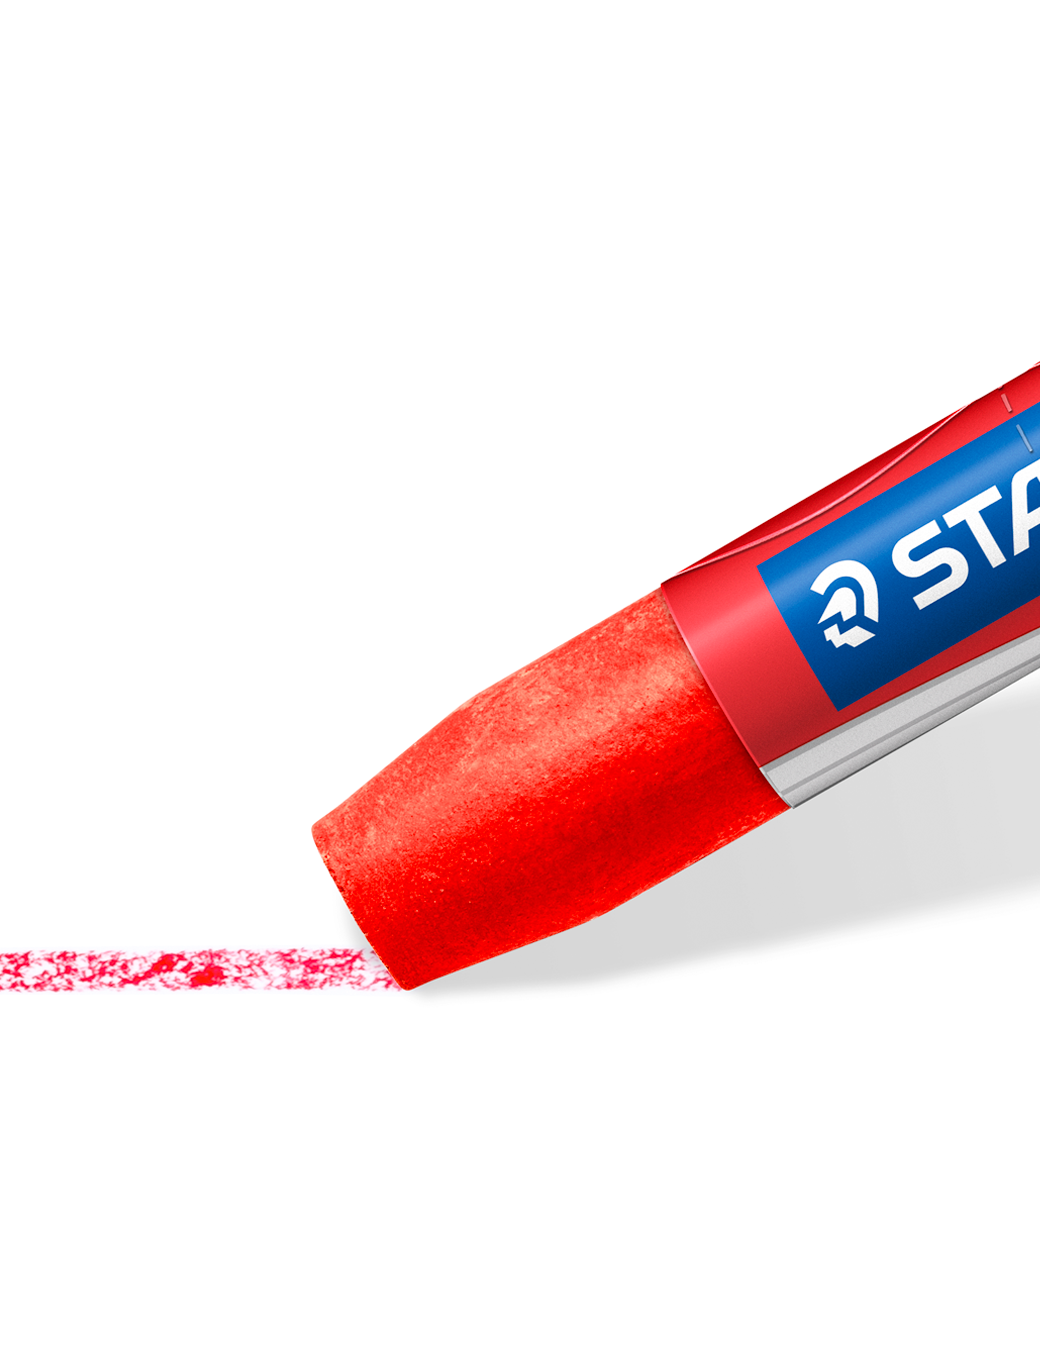 STAEDTLER® 223, watercolor crayons, close up red crayon